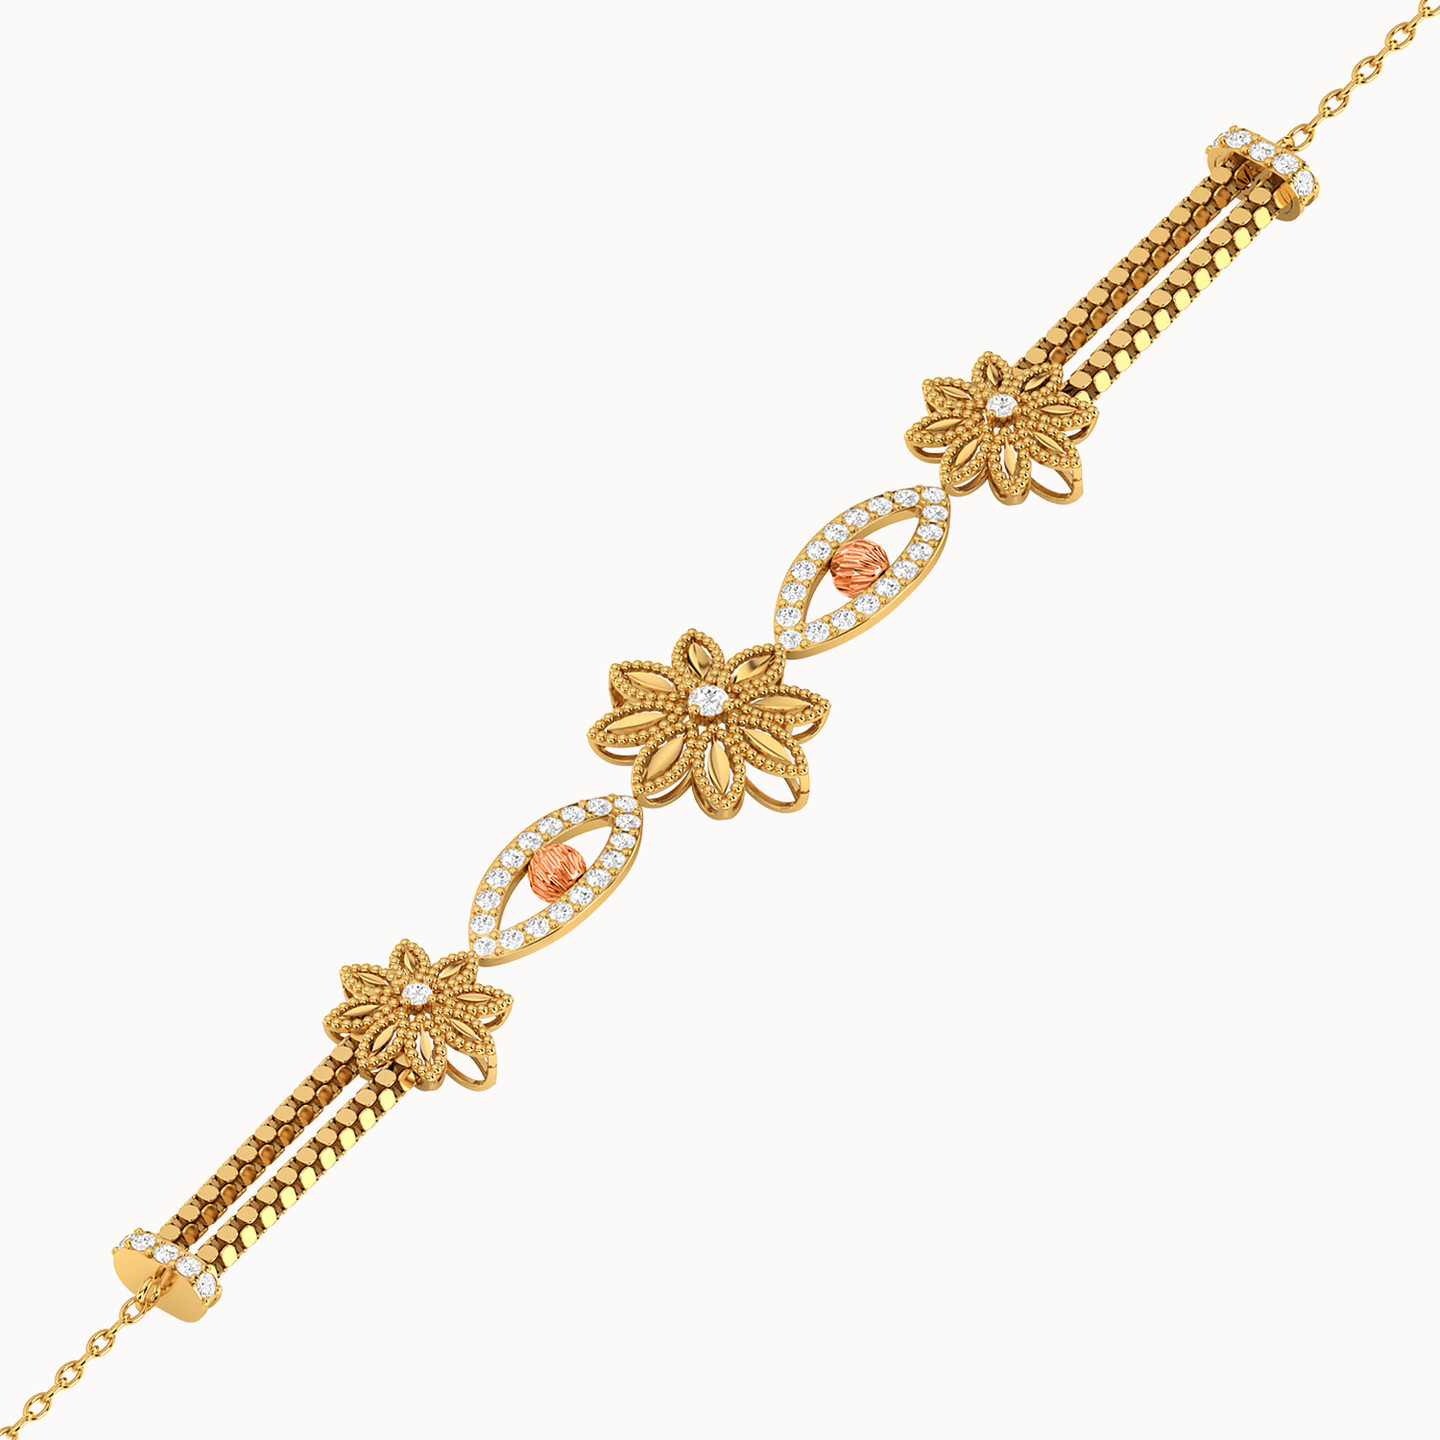 21K Gold Cubic Zirconia Chain Bracelet - 3